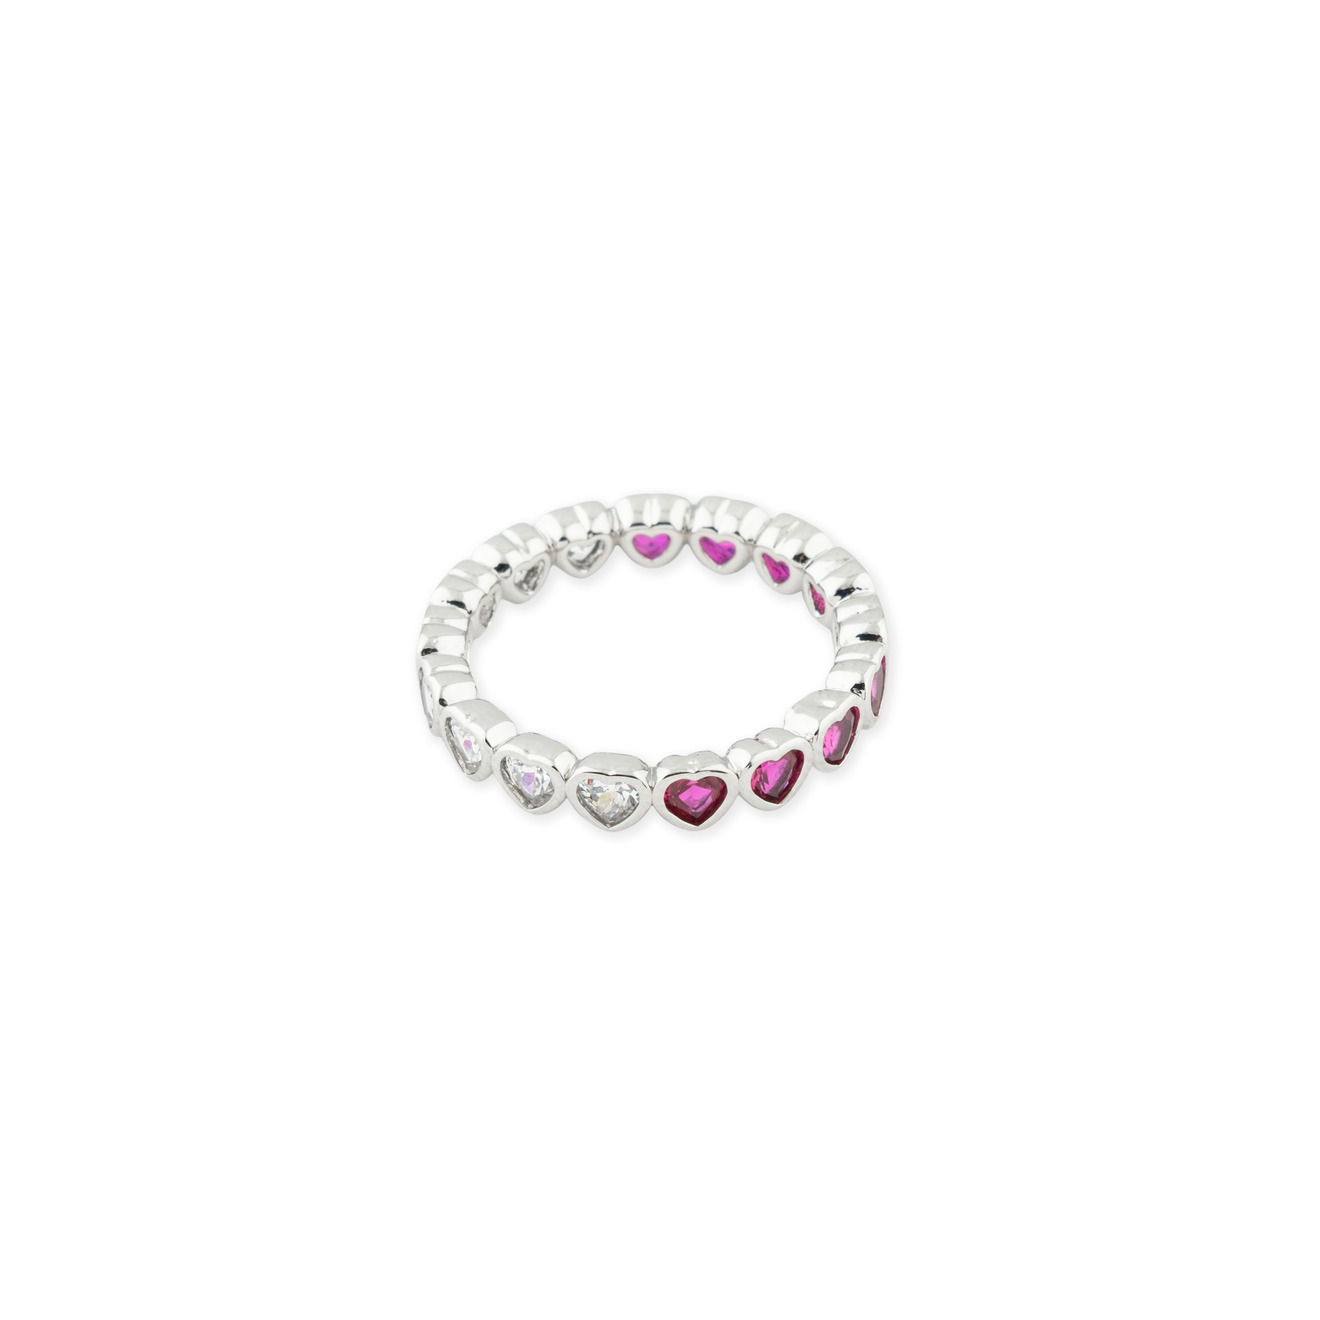 Herald Percy Серебристое кольцо из сердец с белыми и розовыми кристаллами herald percy серебристое незамкнутое кольцо с кристаллами